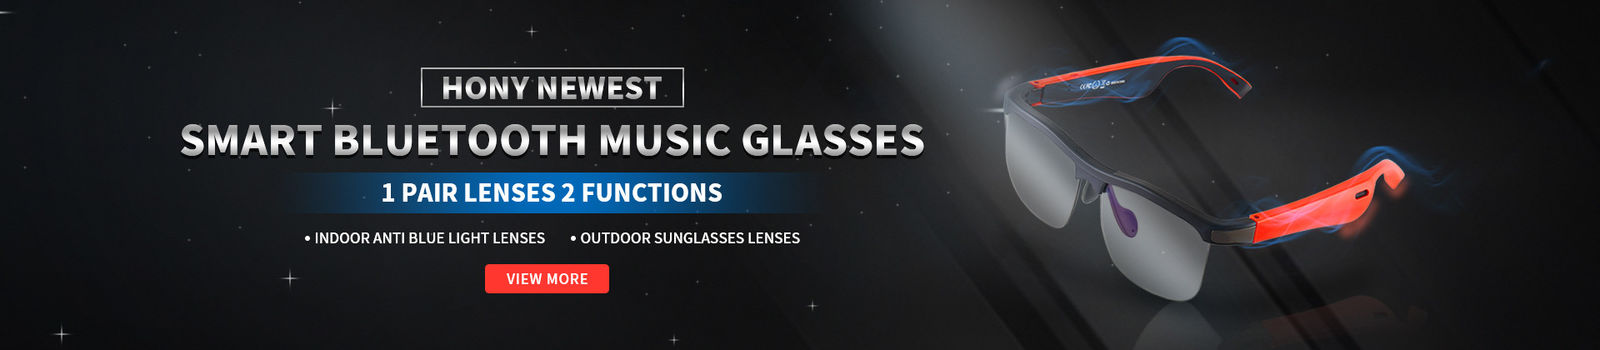 gafas de sol audios del bluetooth